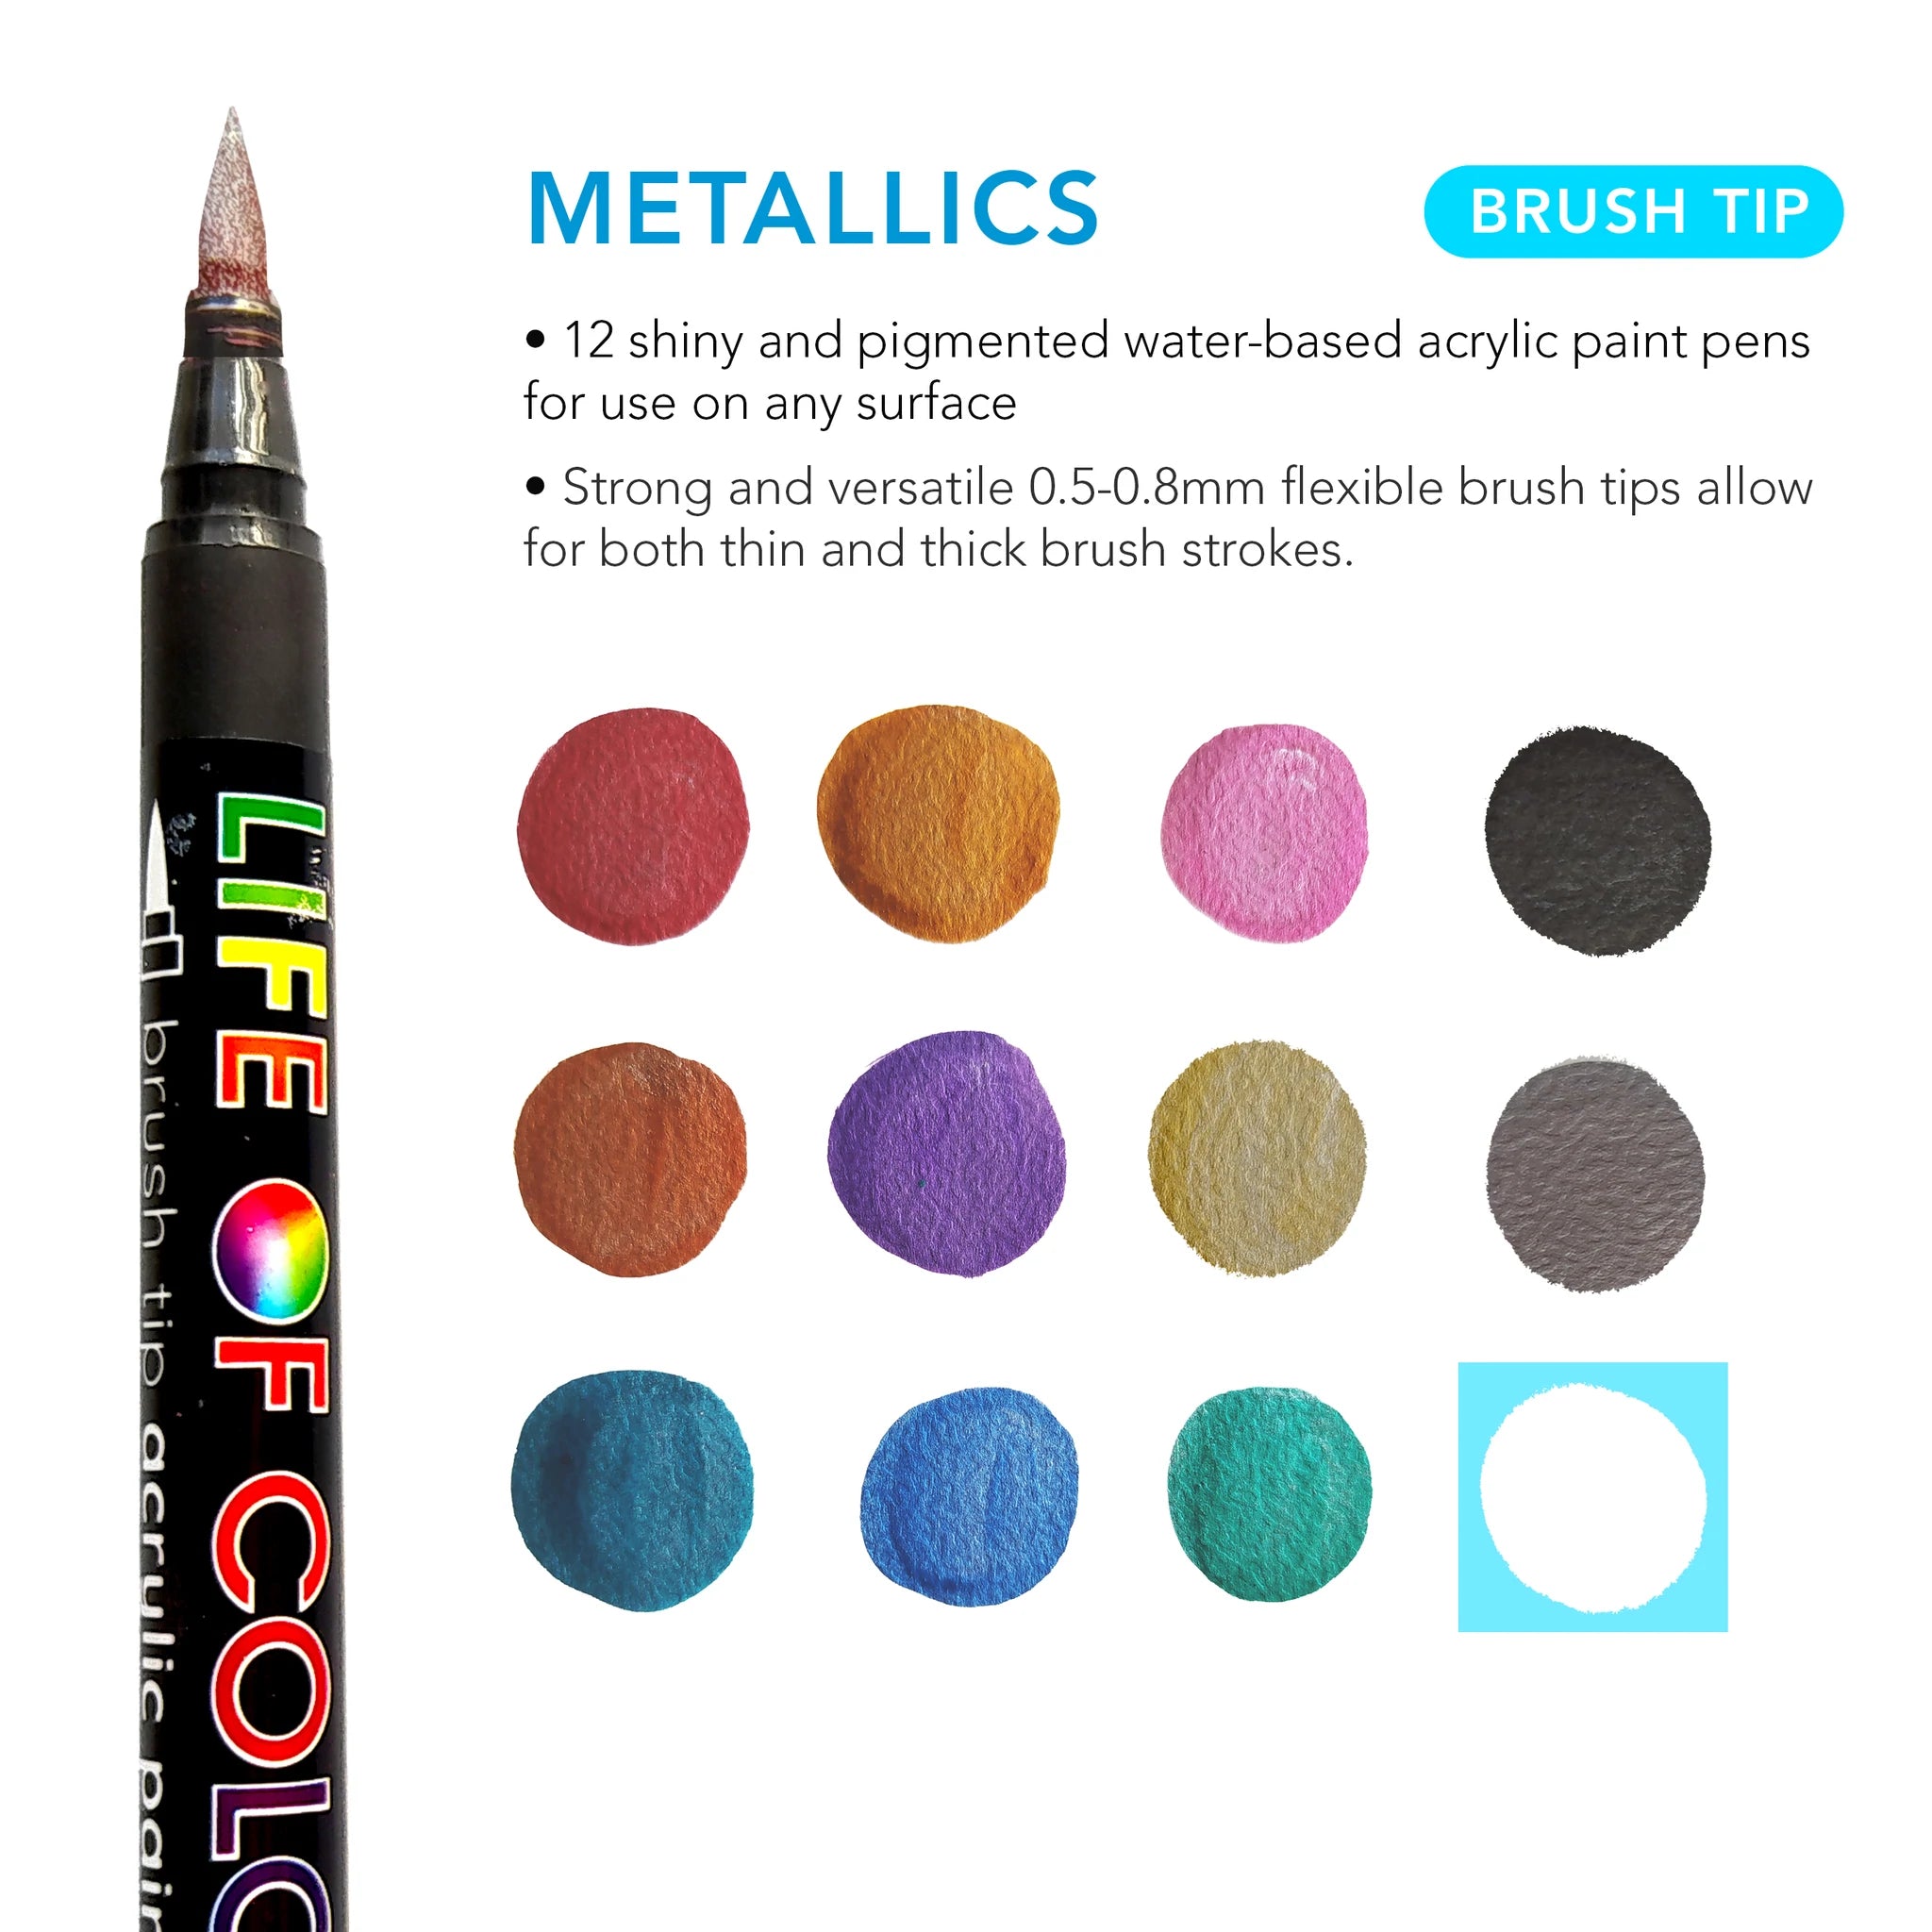 Life of Colour, Essential Colours Brush Tip Acrylic Paint Pens - Set of 16